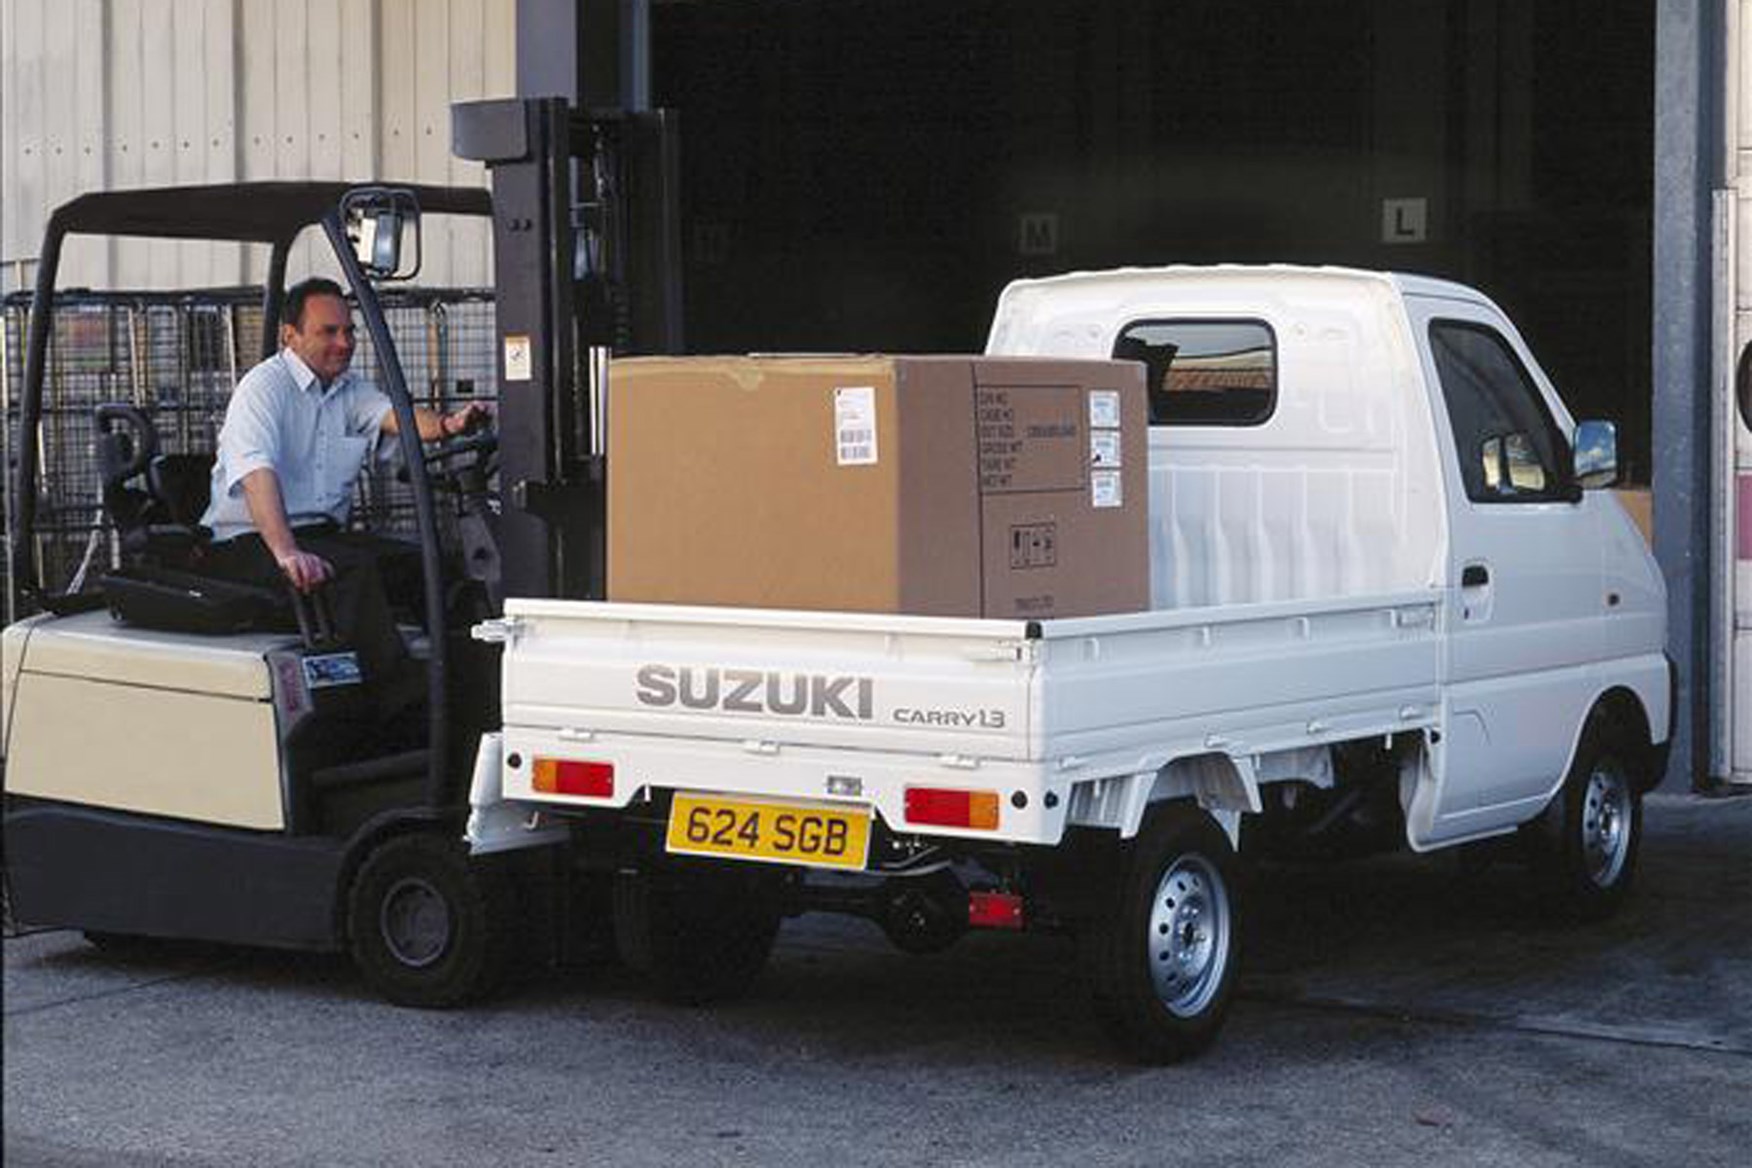 Suzuki Carry van dimensions 1999 2005 capacity payload 